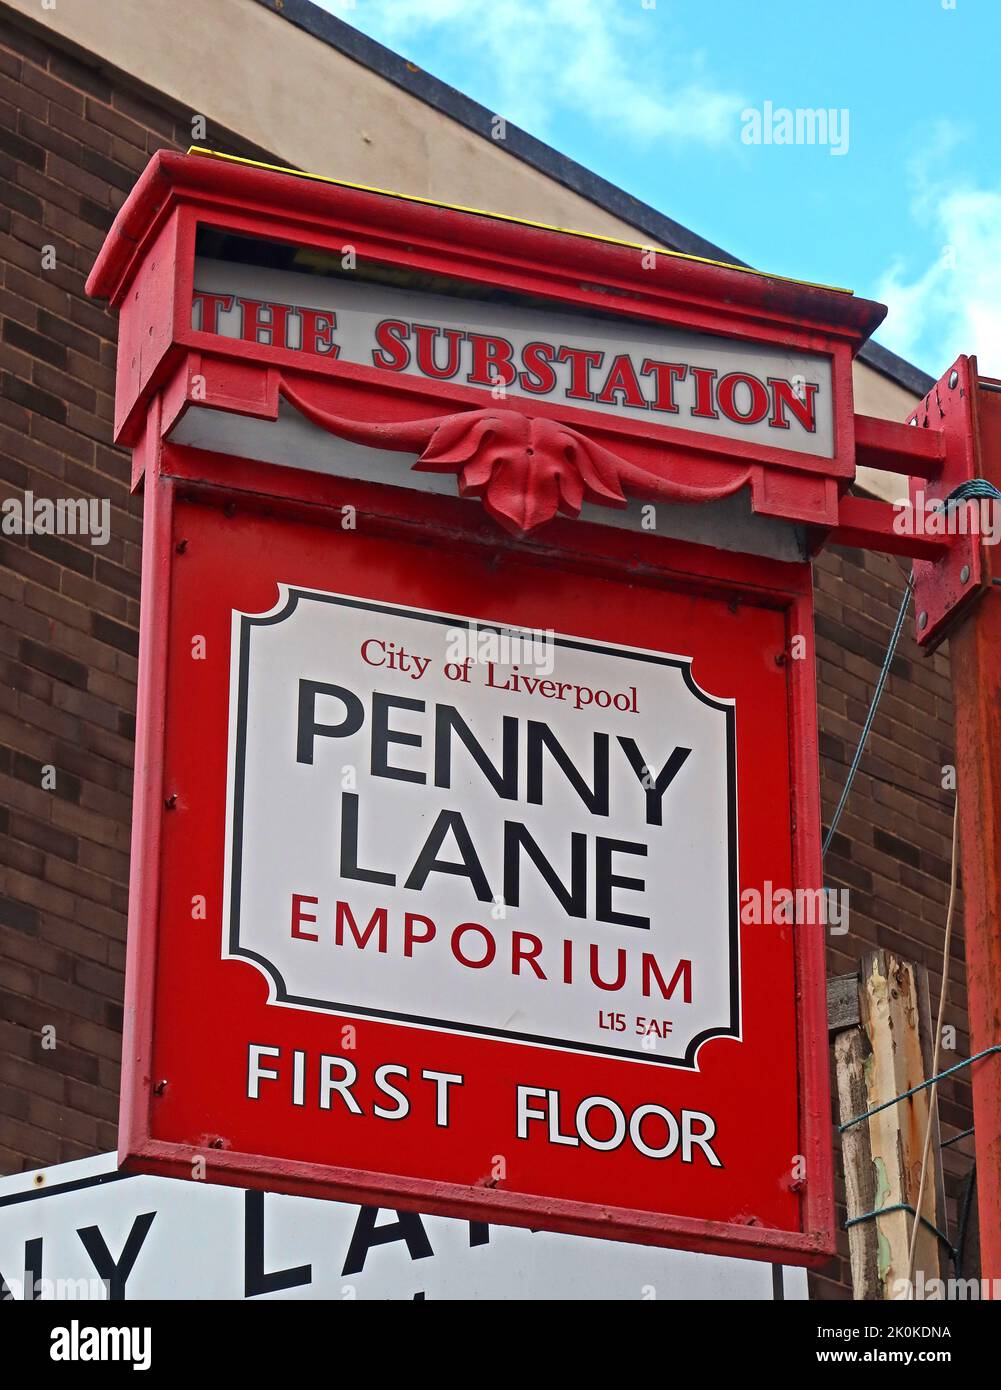 La sous-station, Penny Lane Emporium, Smithdown Road, Liverpool, Merseyside, ANGLETERRE, ROYAUME-UNI, L15 5AF Banque D'Images